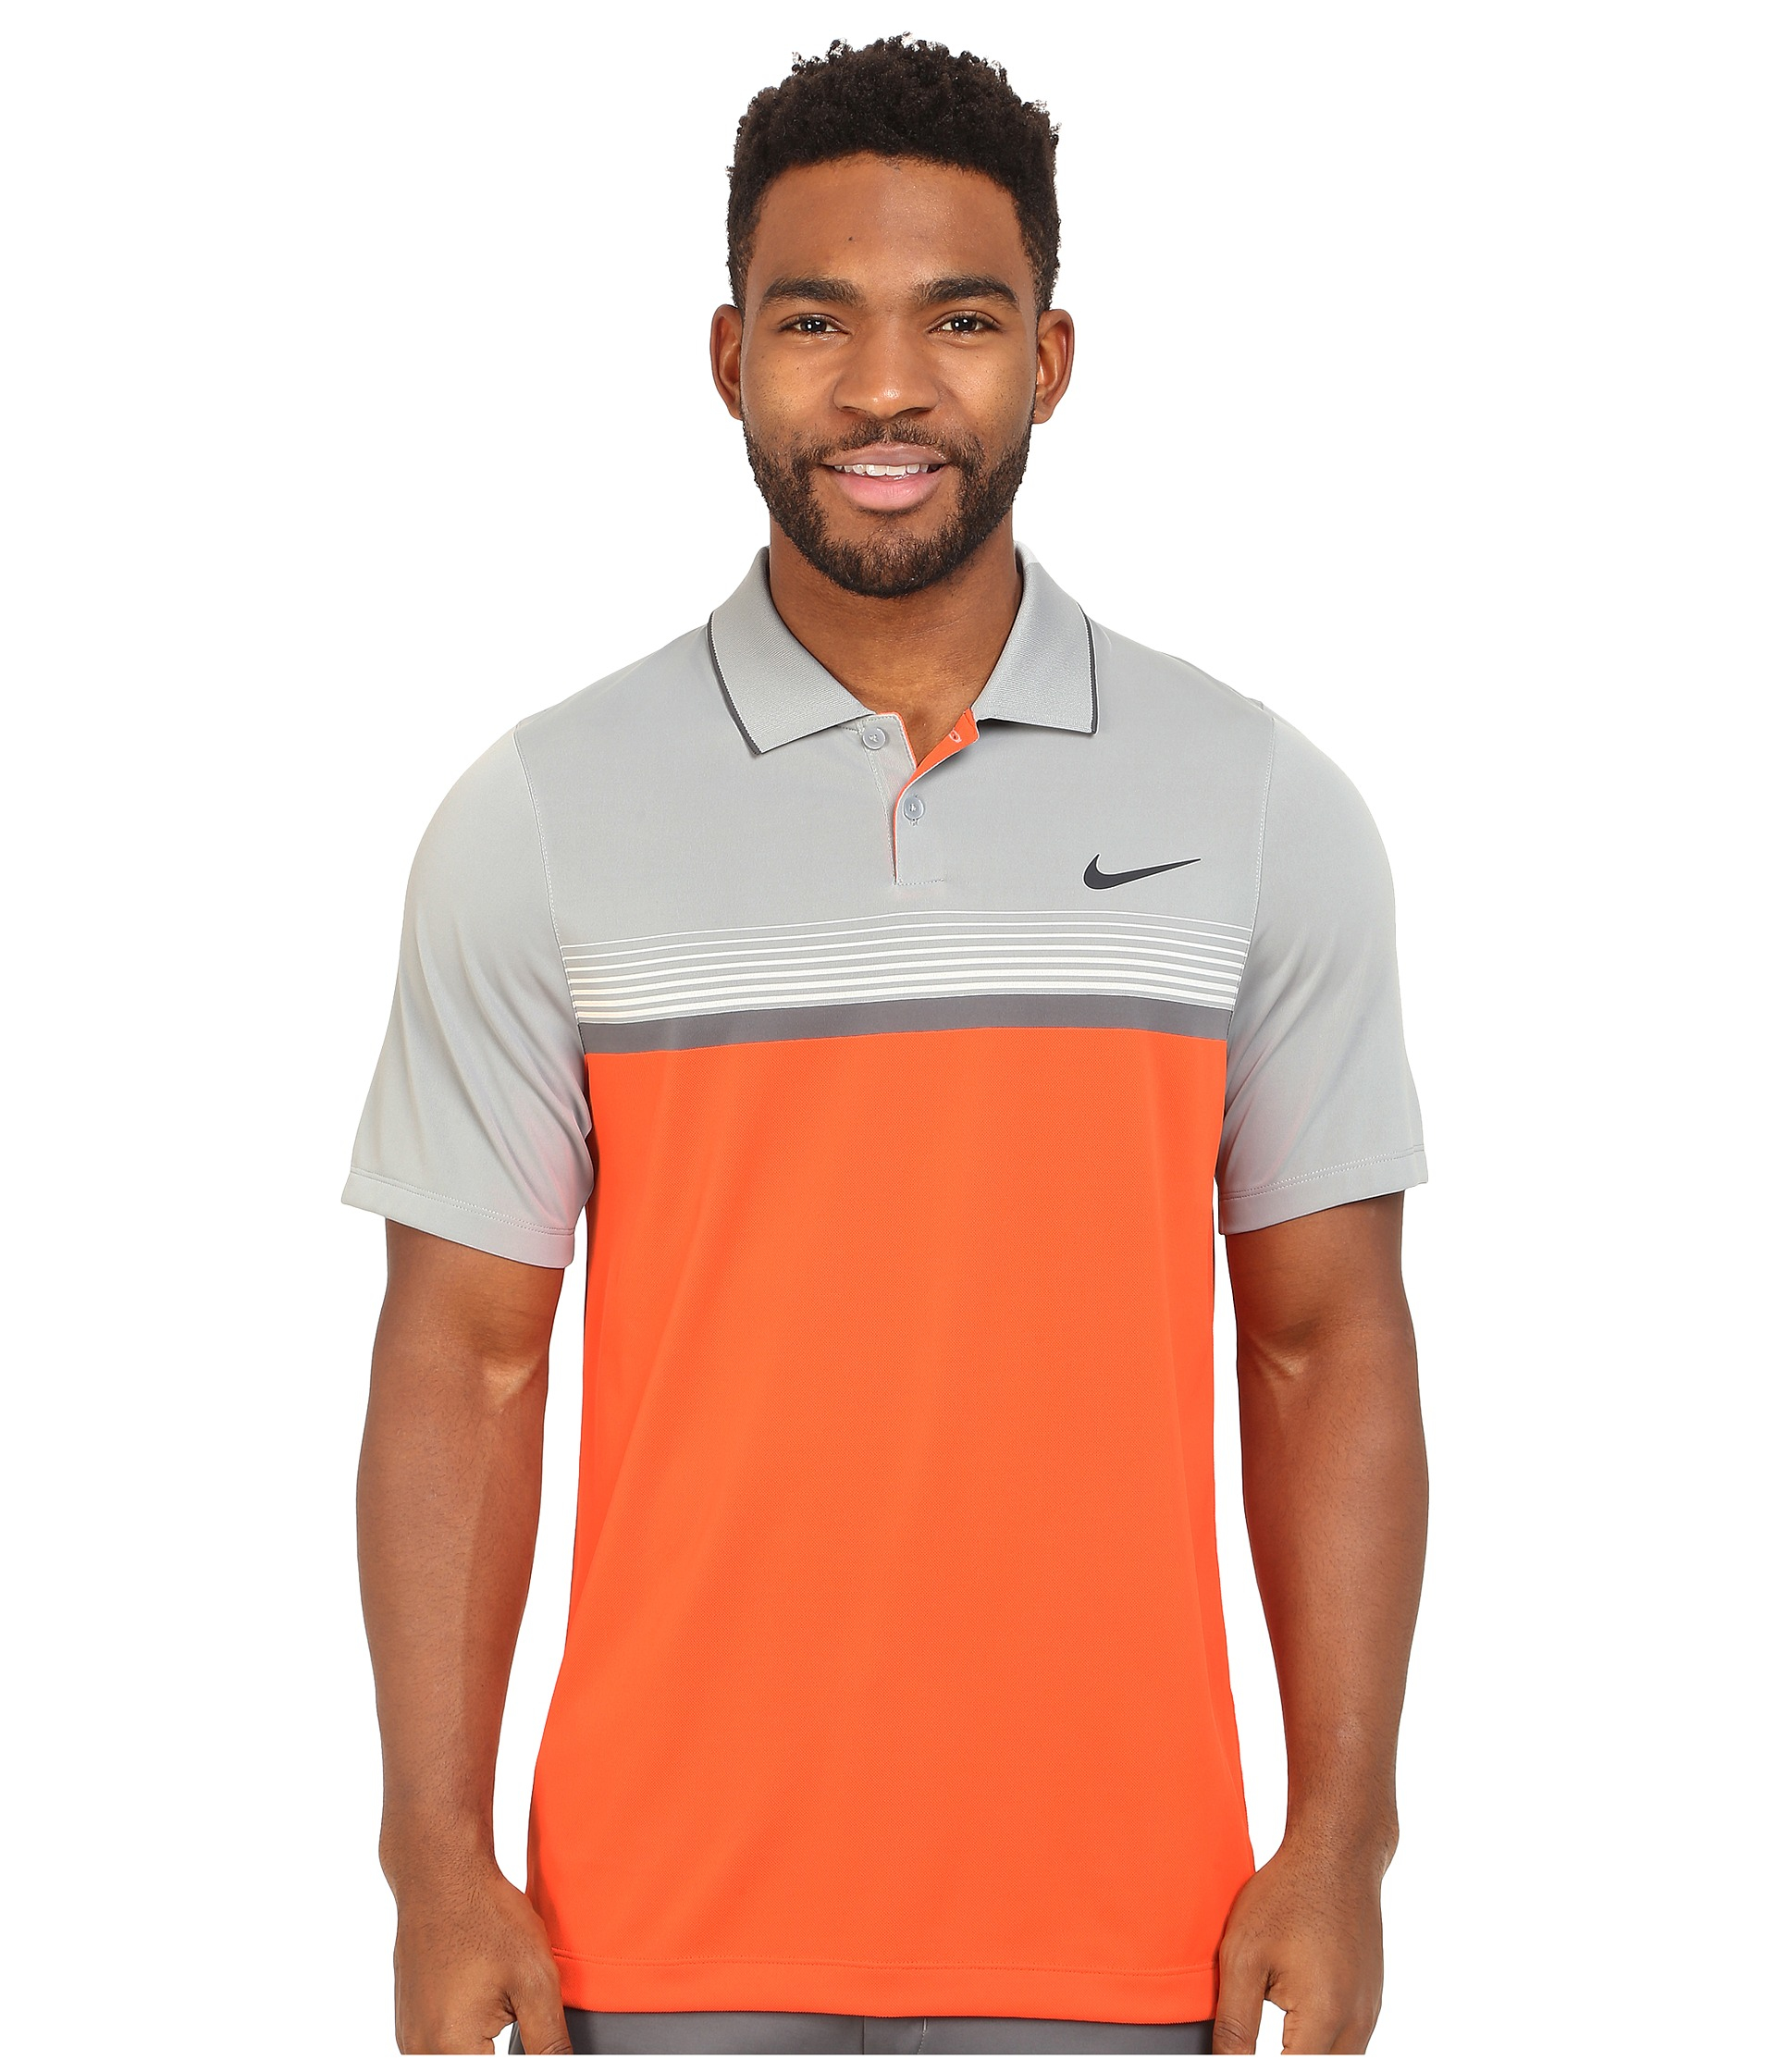 orange and gray nike shirt